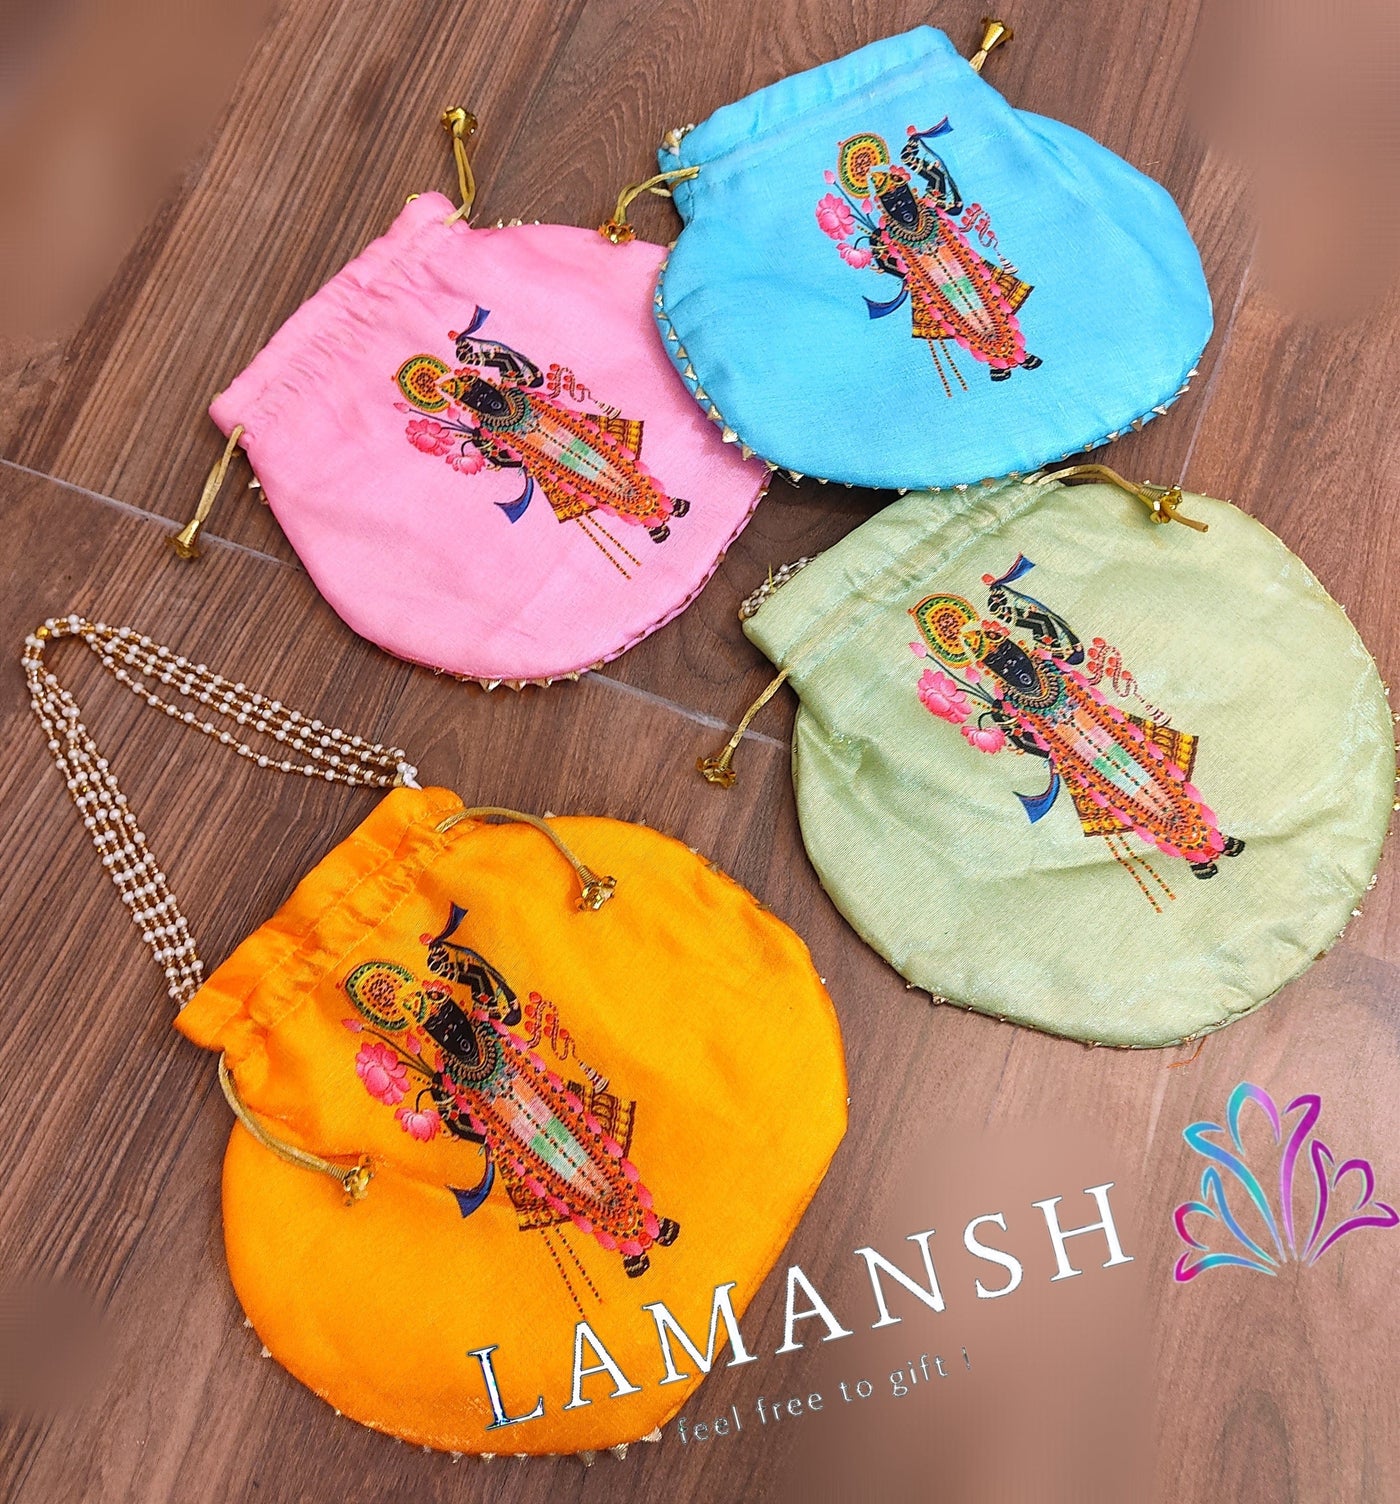 100 Rs each on buying 🏷in bulk | Call 📞 at 8619550223 Women's Potli Bag LAMANSH® Shreenath ji 🙏 potli bags for festival puja giveaways | Shrinath ji Print potli bags for return gifting in Wedding & Religious functions